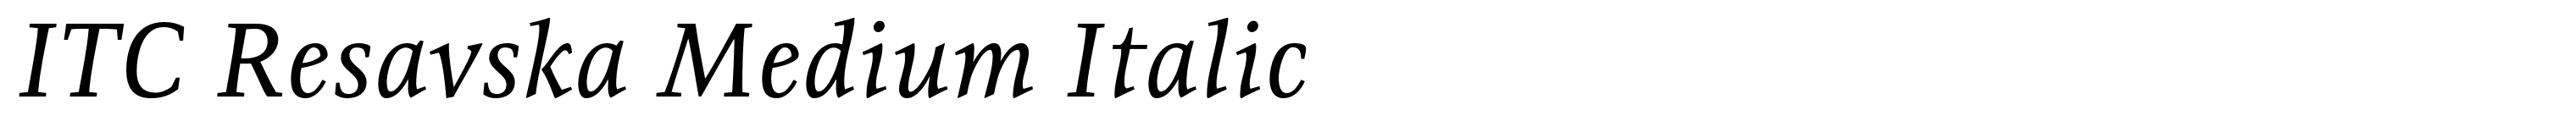 ITC Resavska Medium Italic